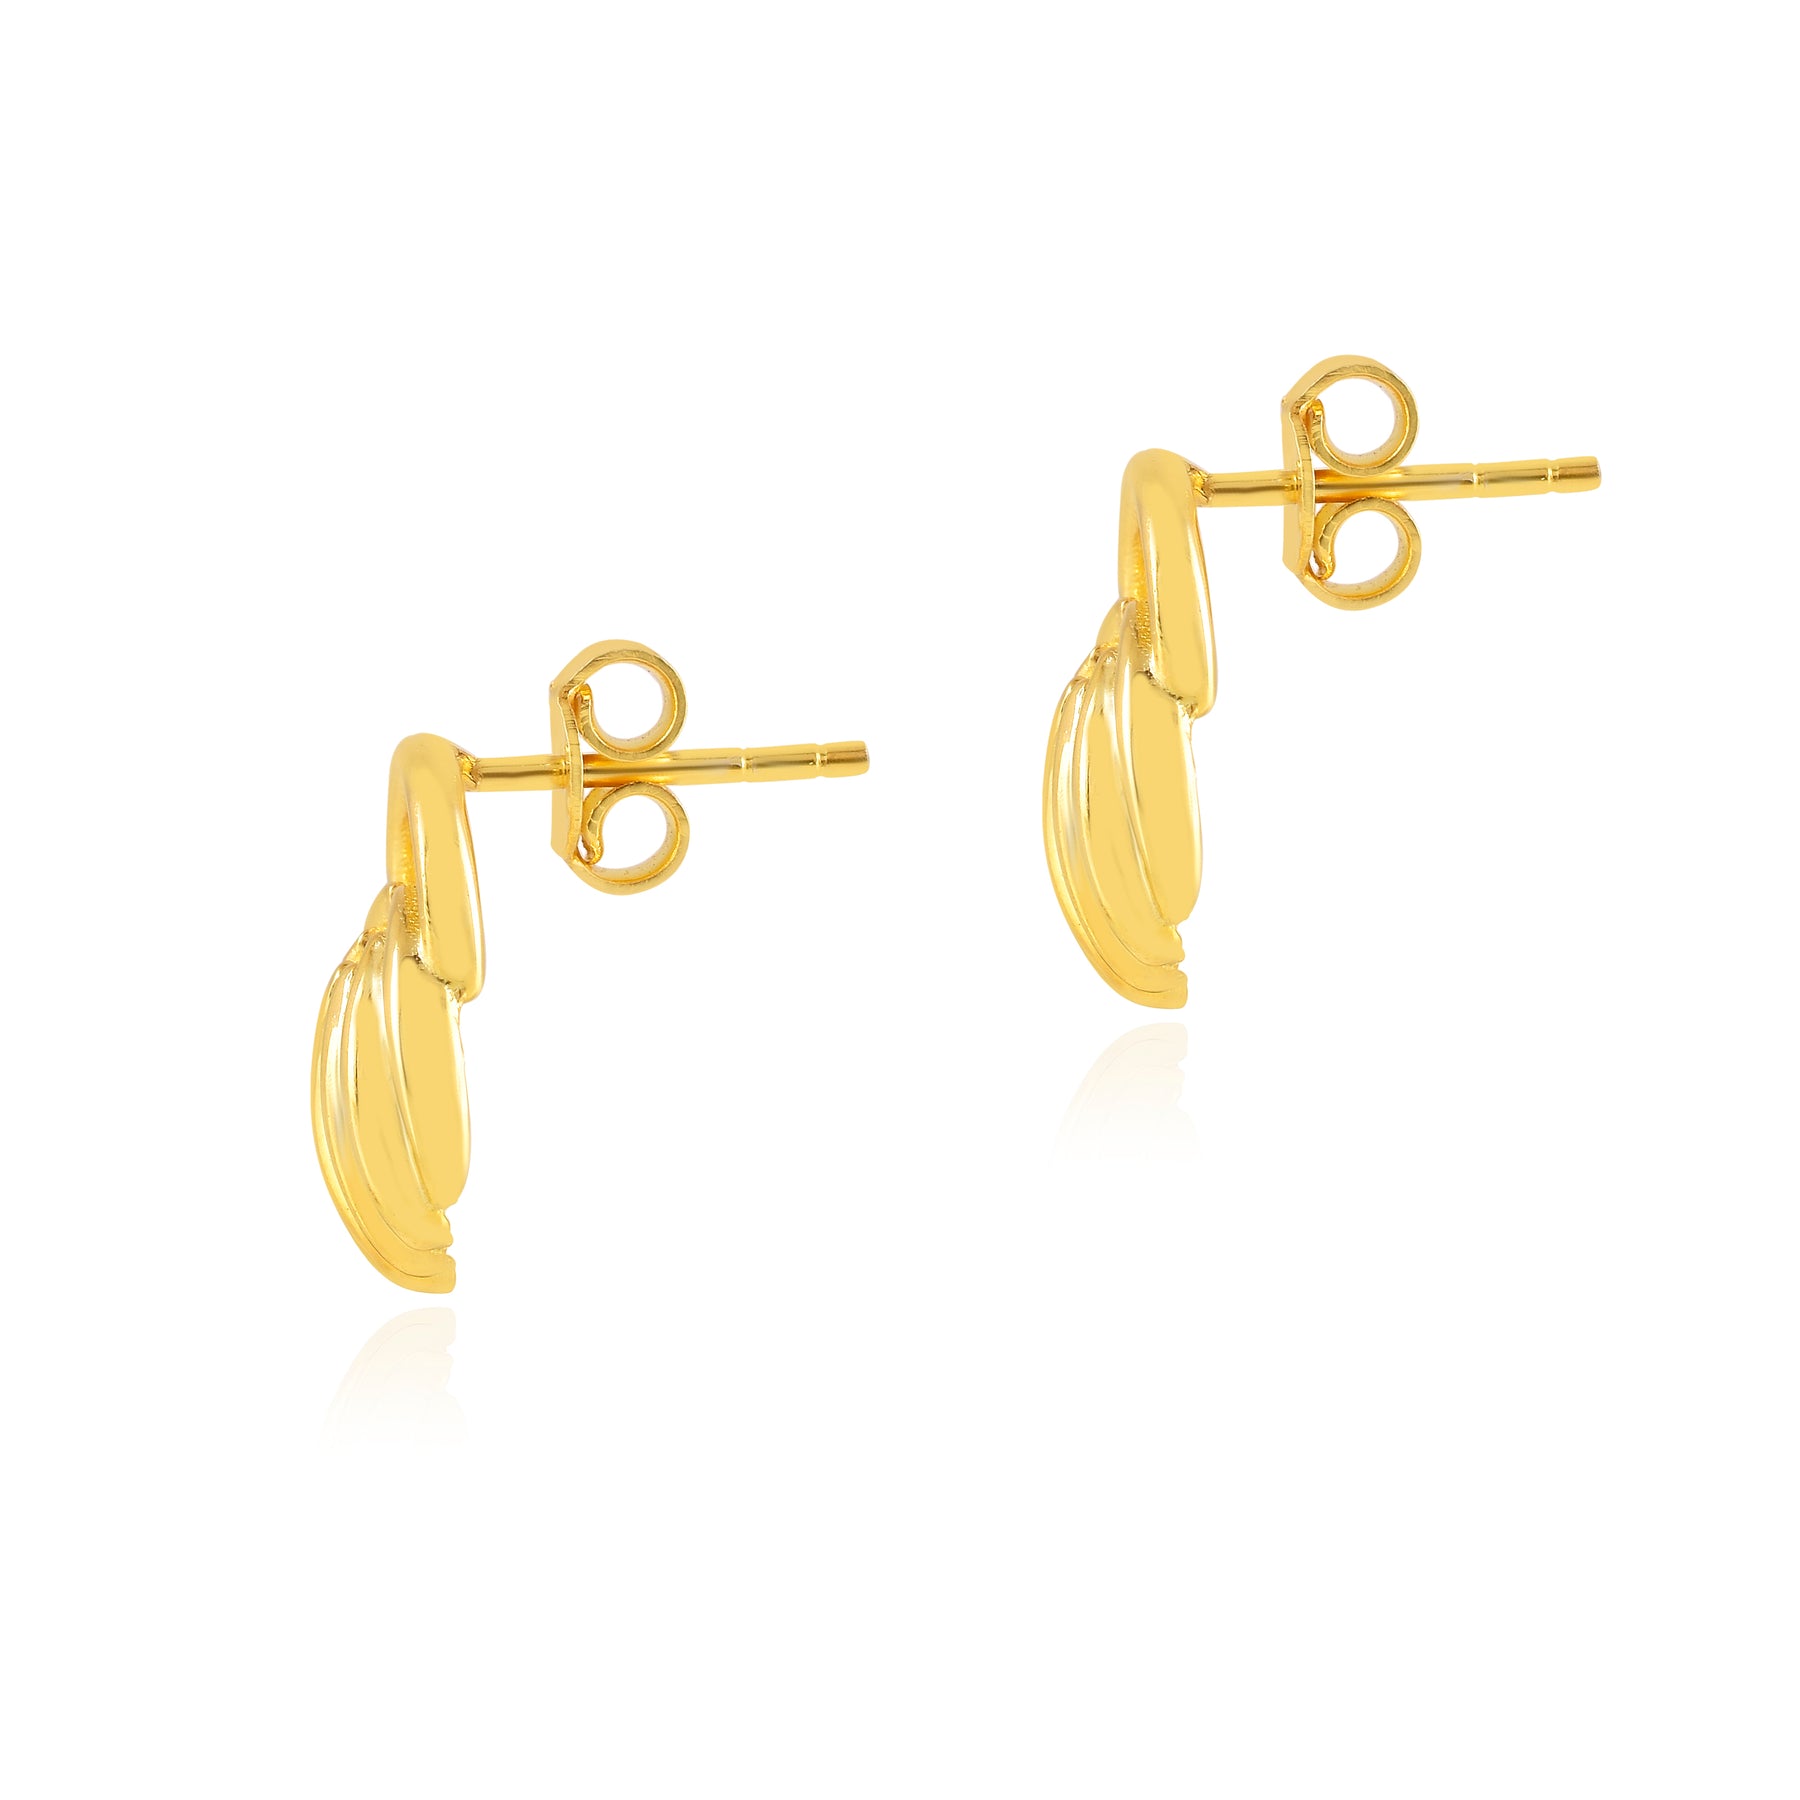 Gold Finish Flower Bracelet with Silver Earrings Set